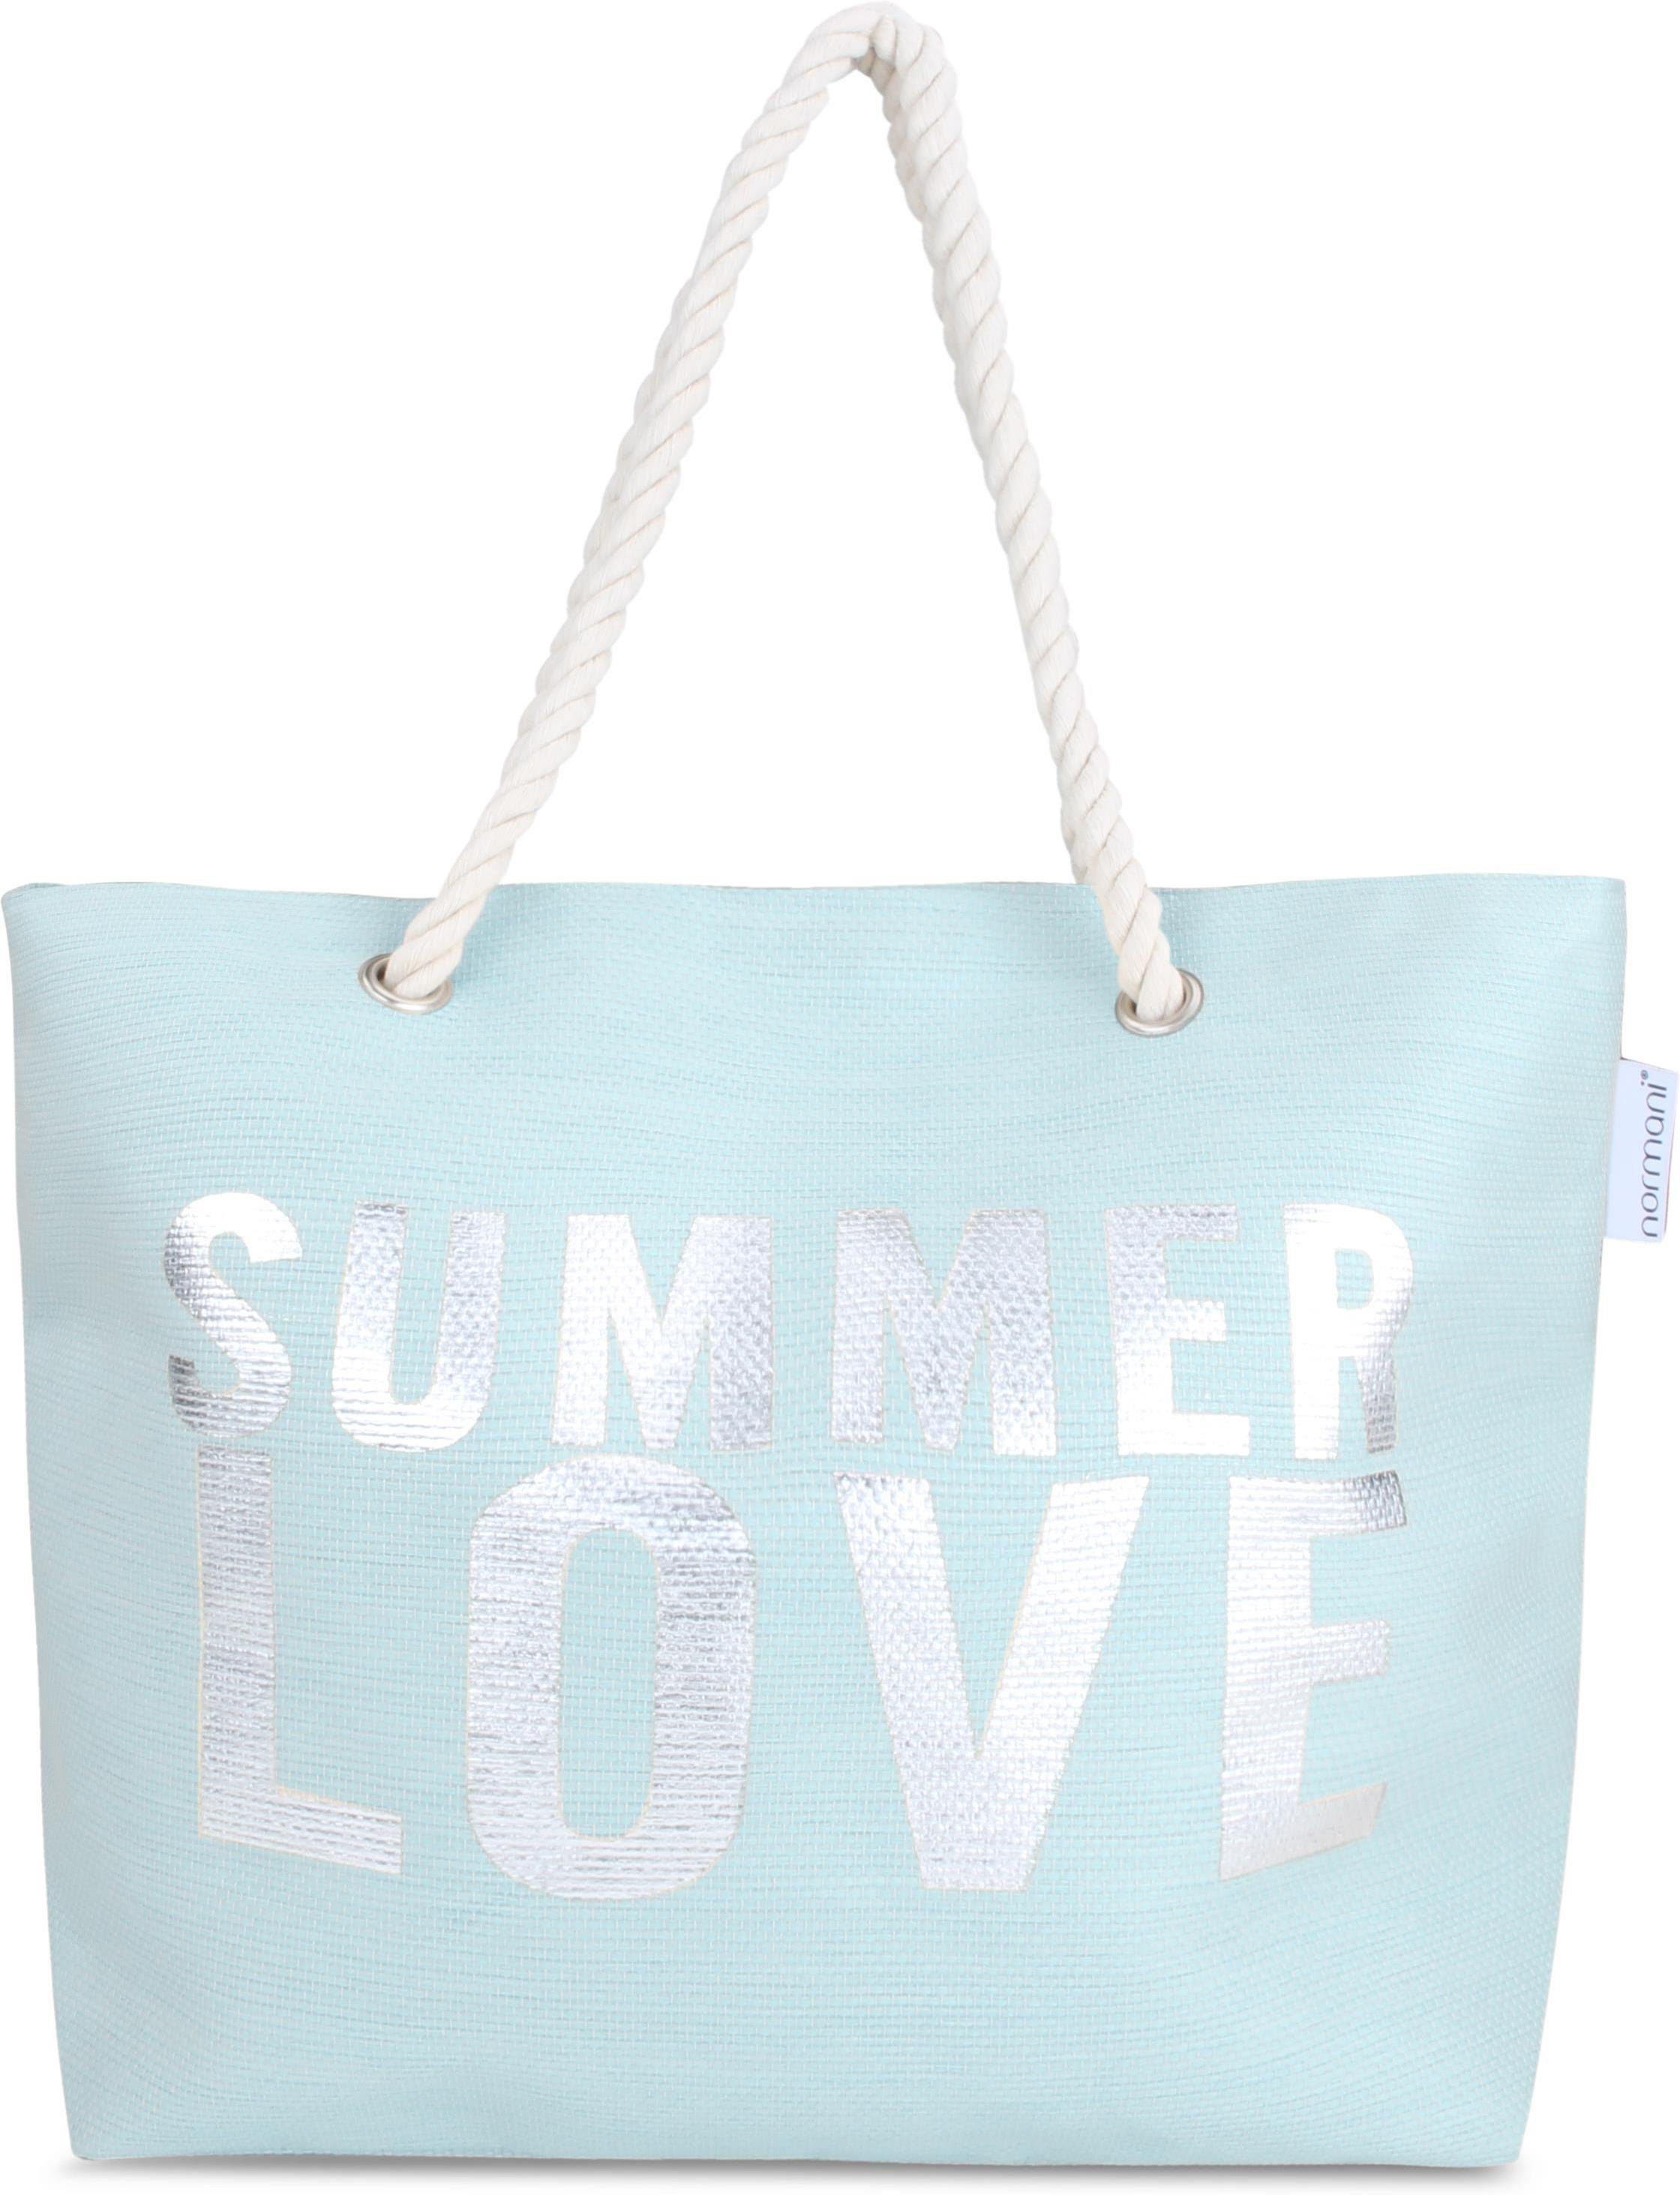 normani Strandtasche Bequeme Sommer-Umhängetasche, Strandtasche, Schultertasche als Henkeltasche tragbar Summer Love Blue